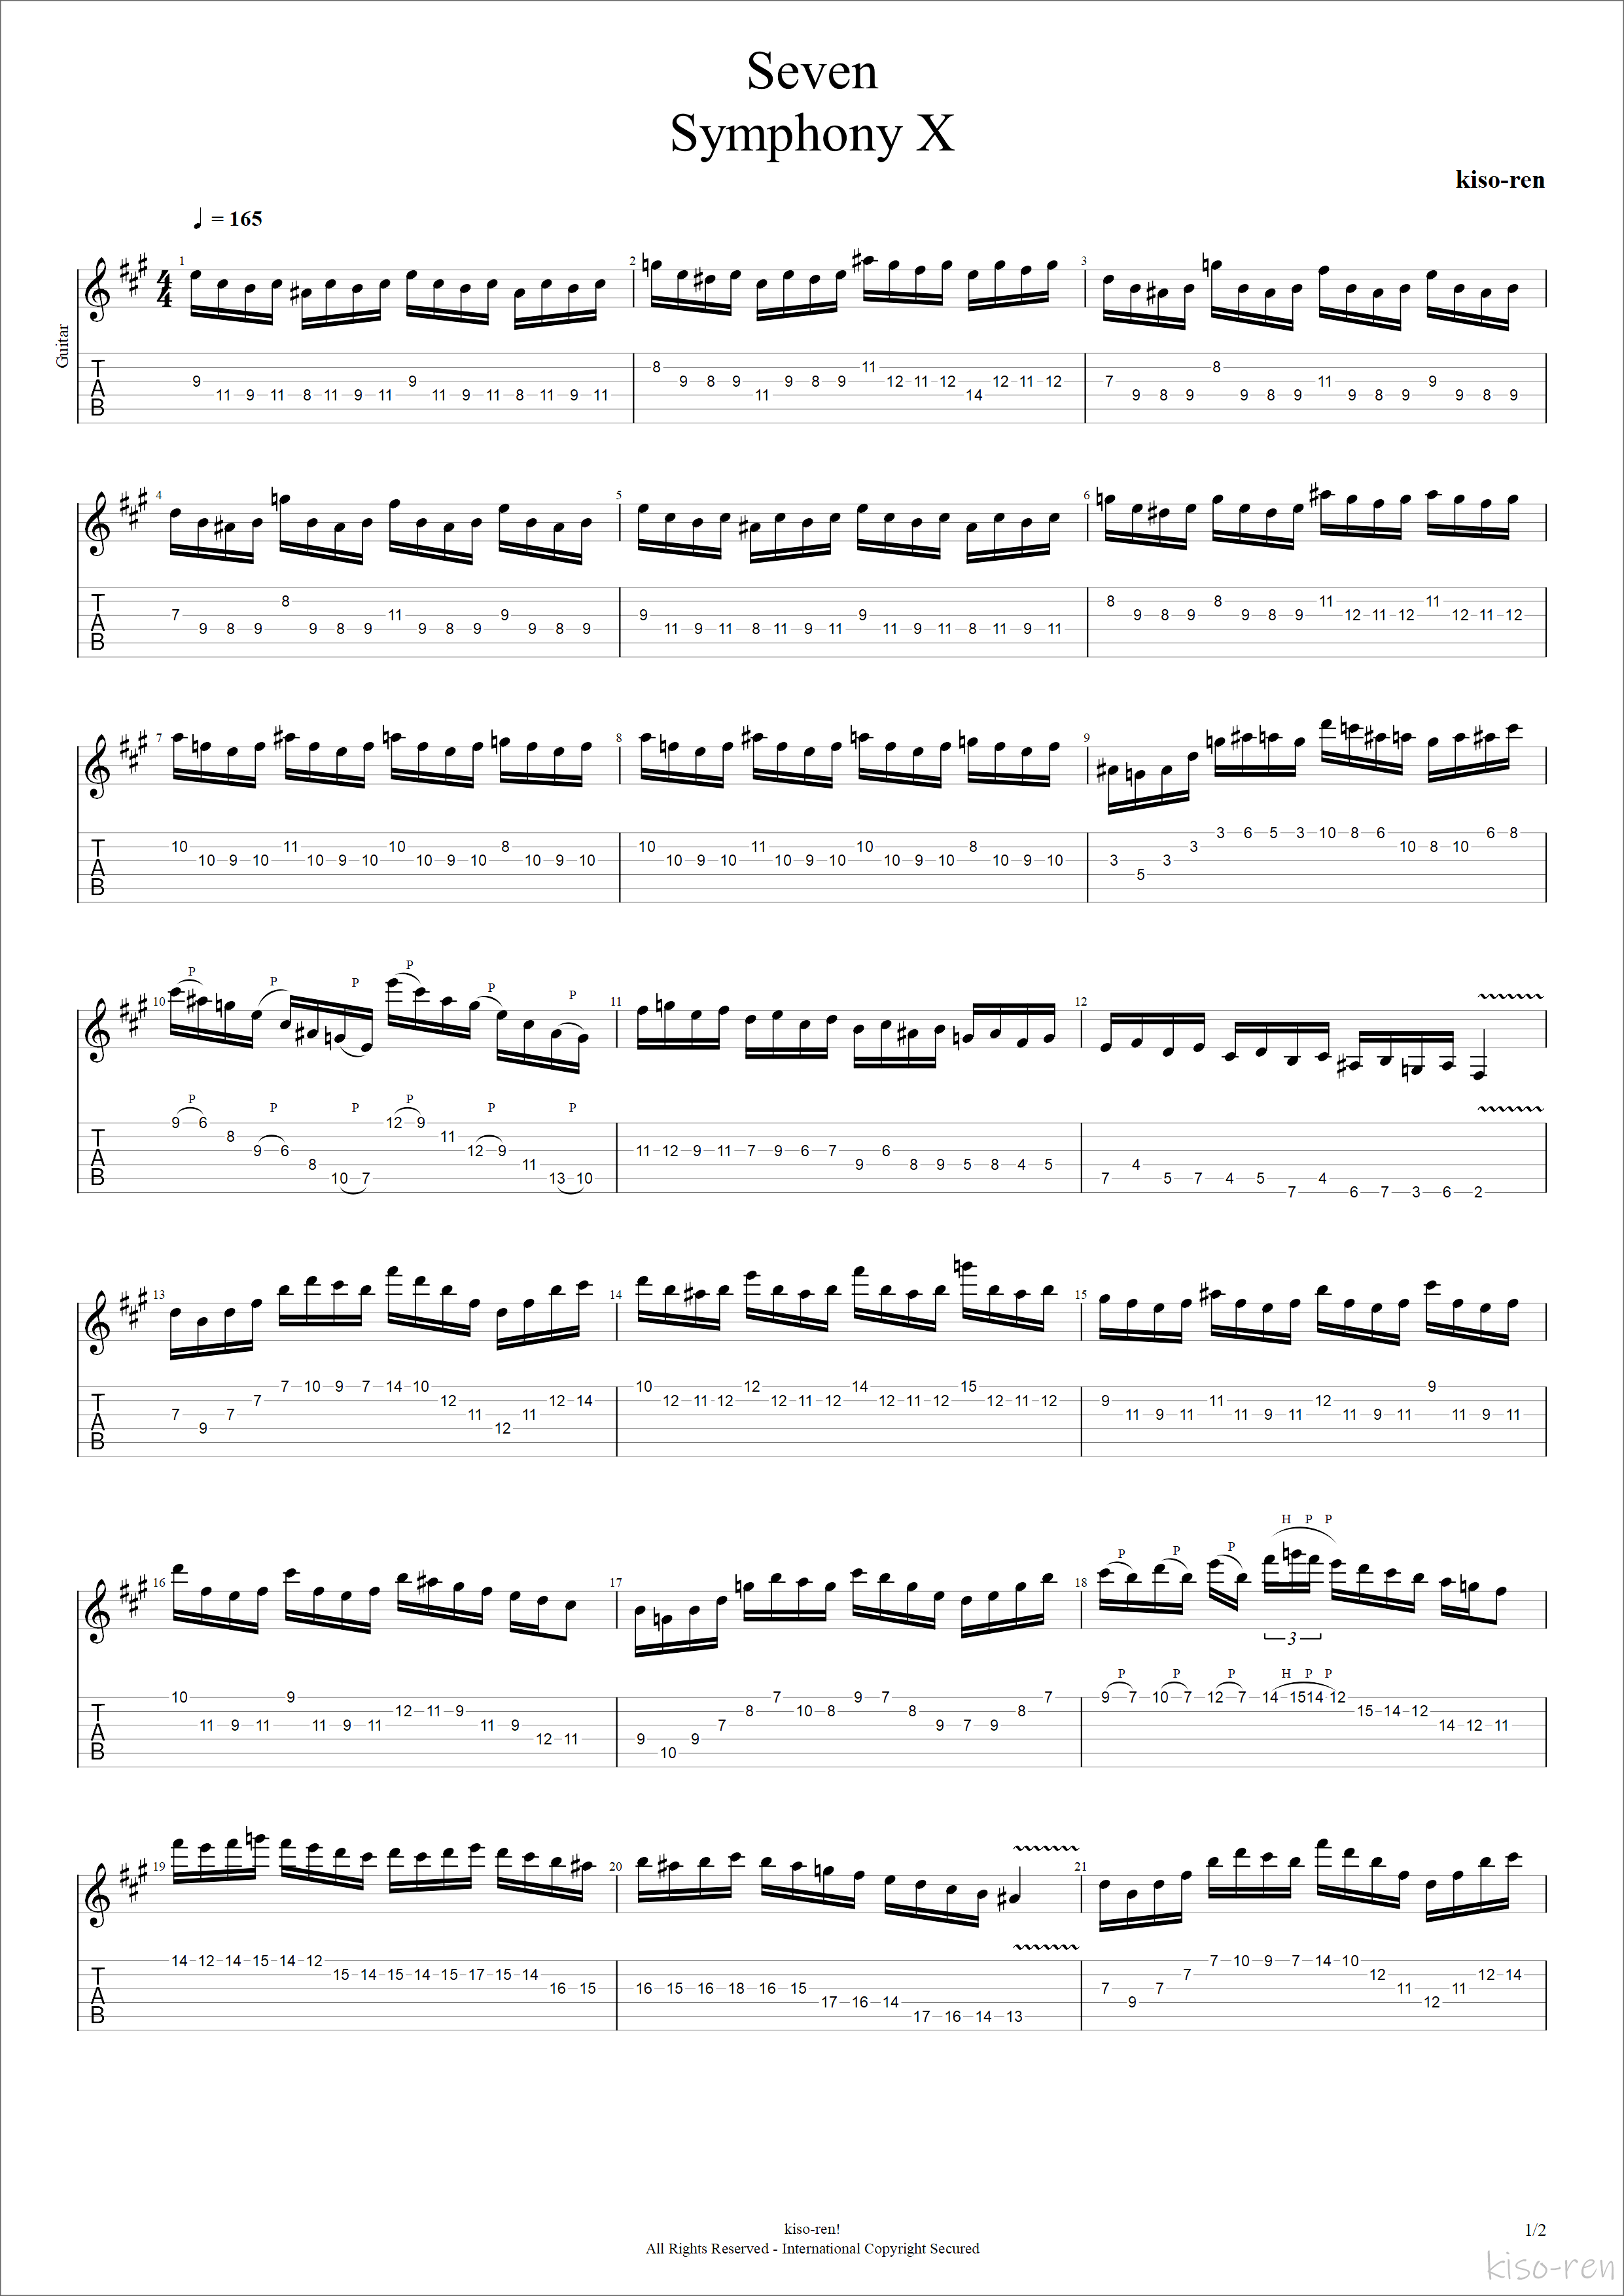 【TAB】Seven シンフォニーX マイケルロメオ セブン Symphony X Guitar Intro Michael Romeo ピッキング基礎練習ゆっくり【Guitar Picking Vol.92】